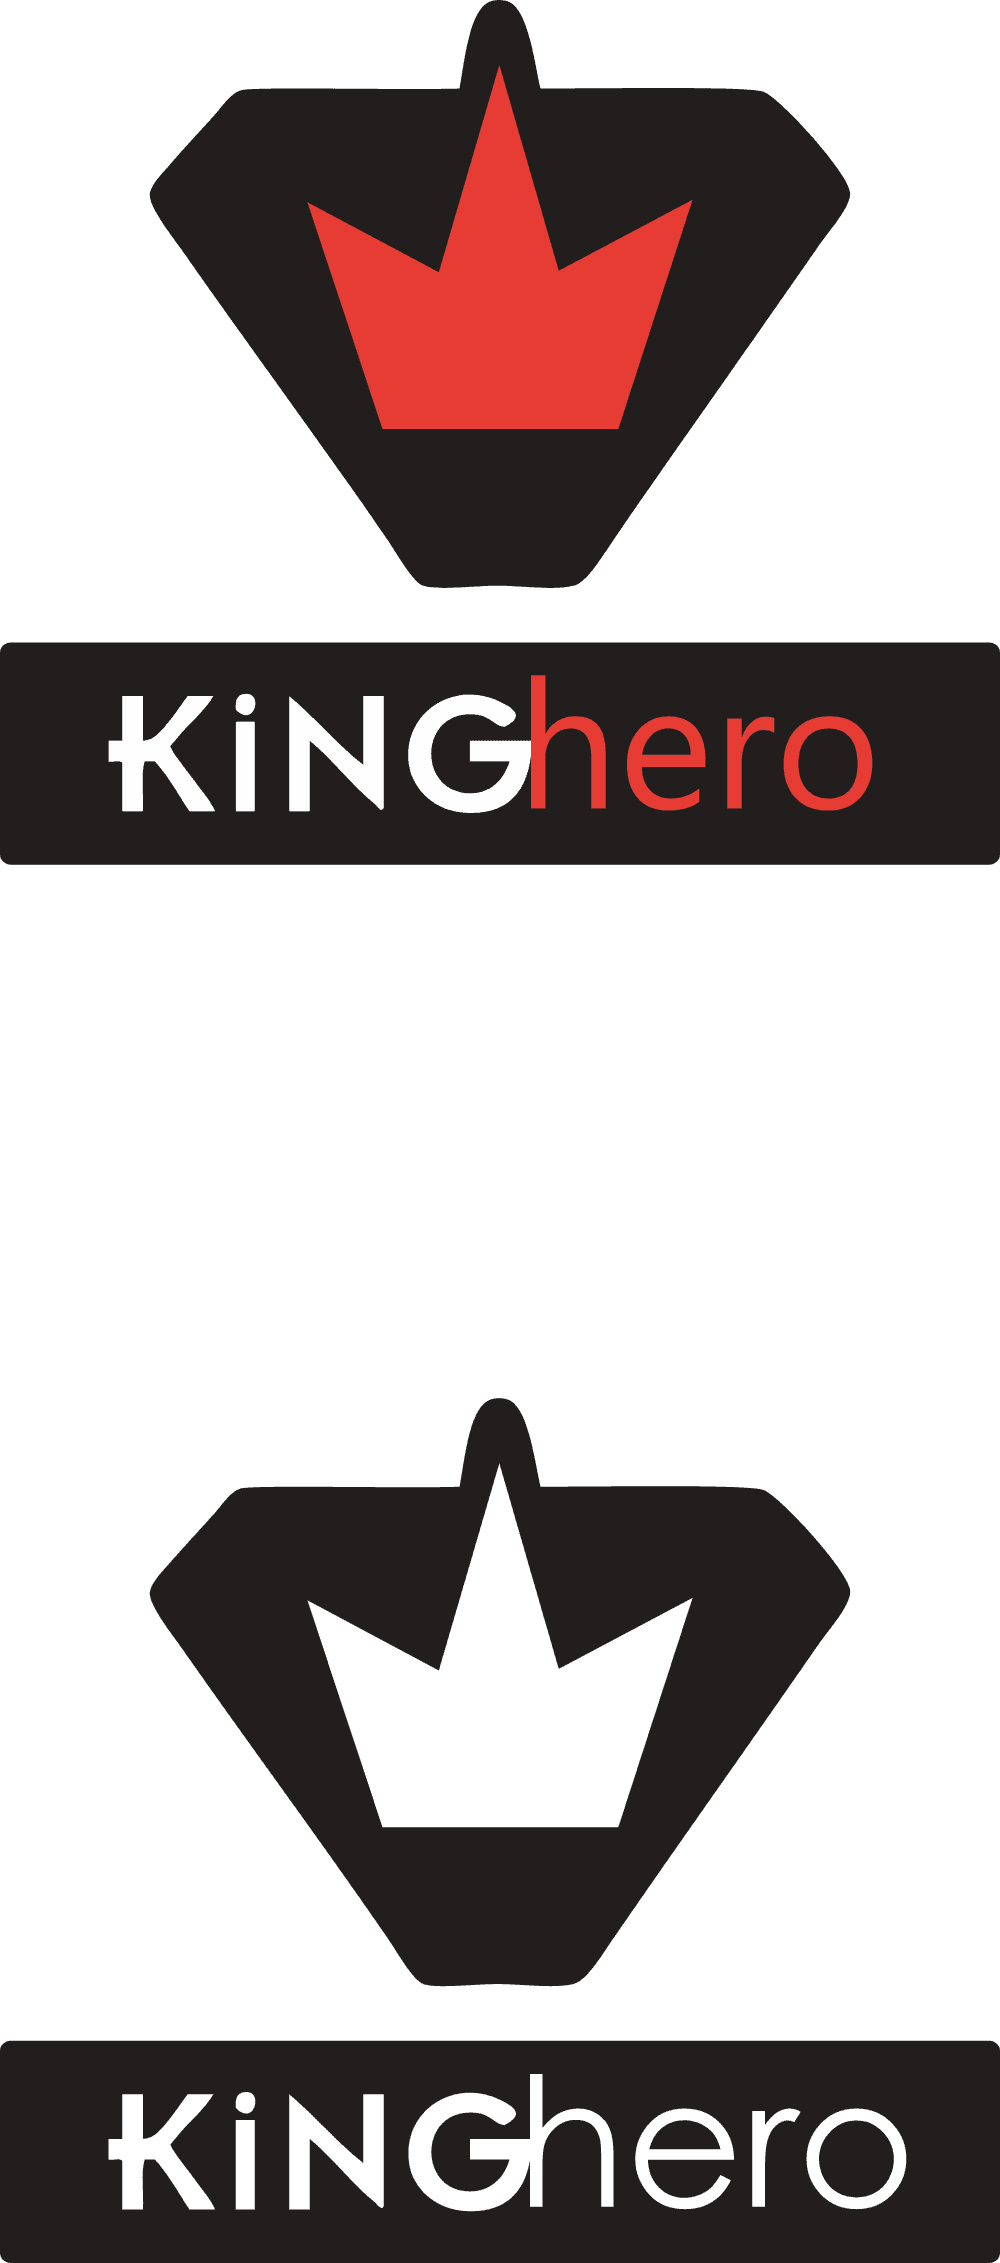 KingHero Logo download